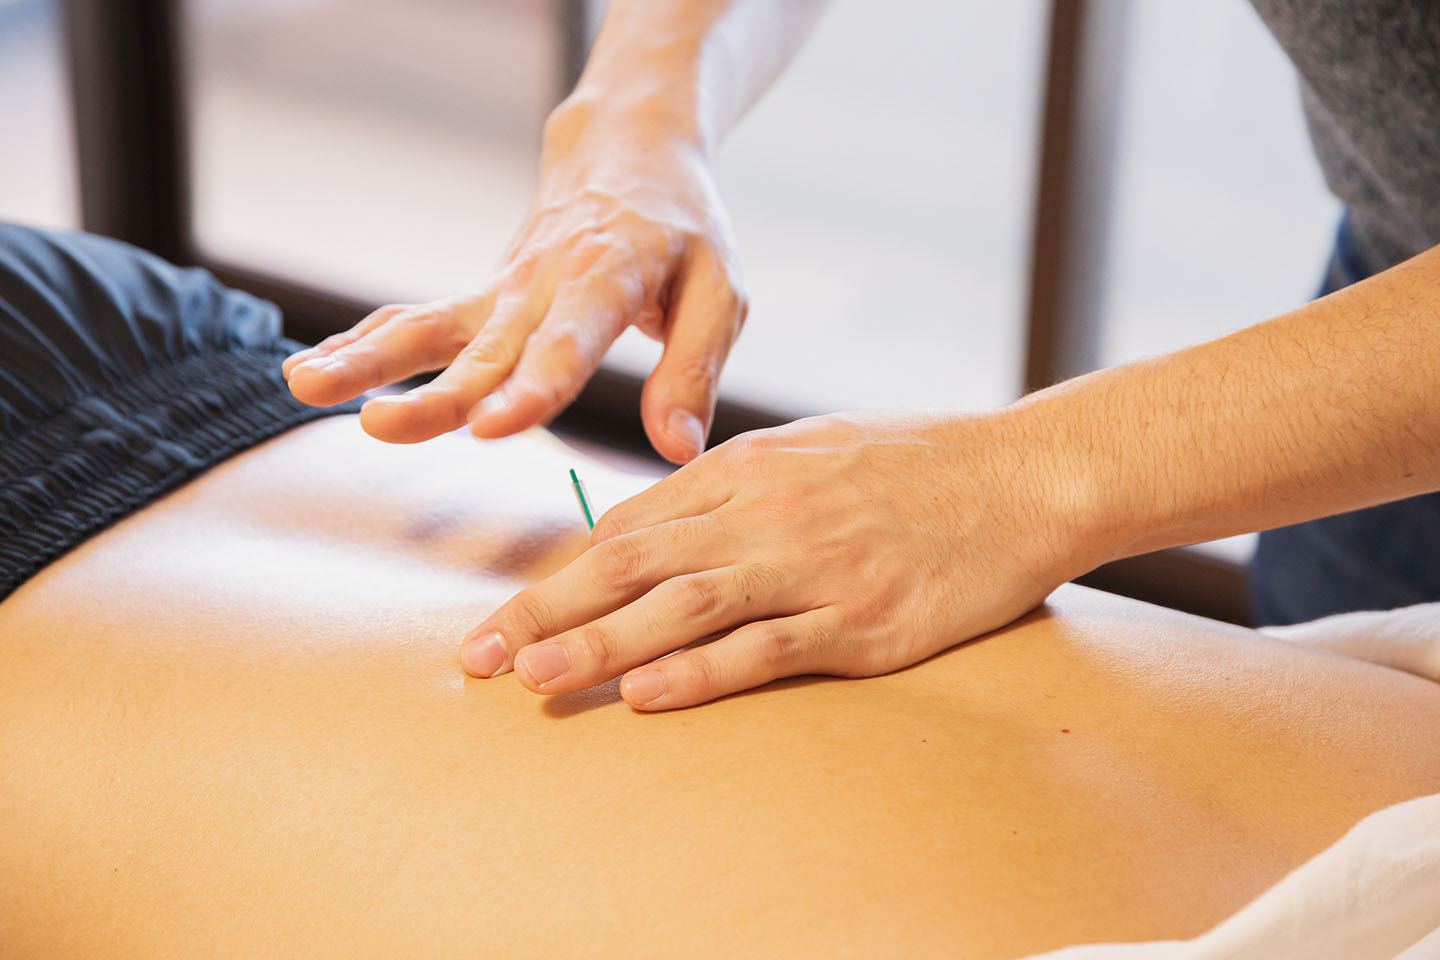 Akupunktur fysioterapi behandling